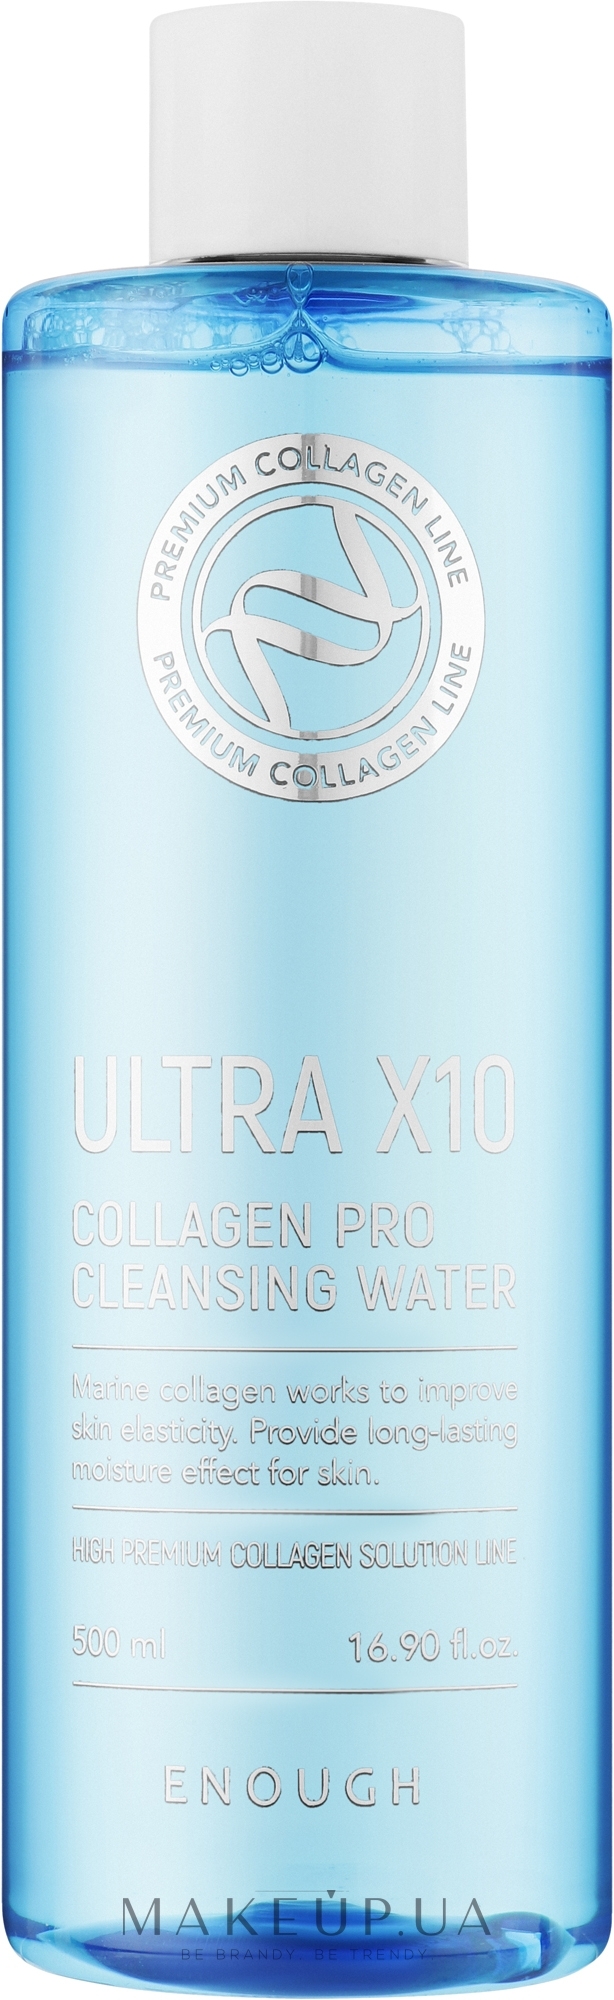 Очищающая вода для лица с морским коллагеном - Enough Ultra X10 Collagen Pro Cleansing Water — фото 500ml